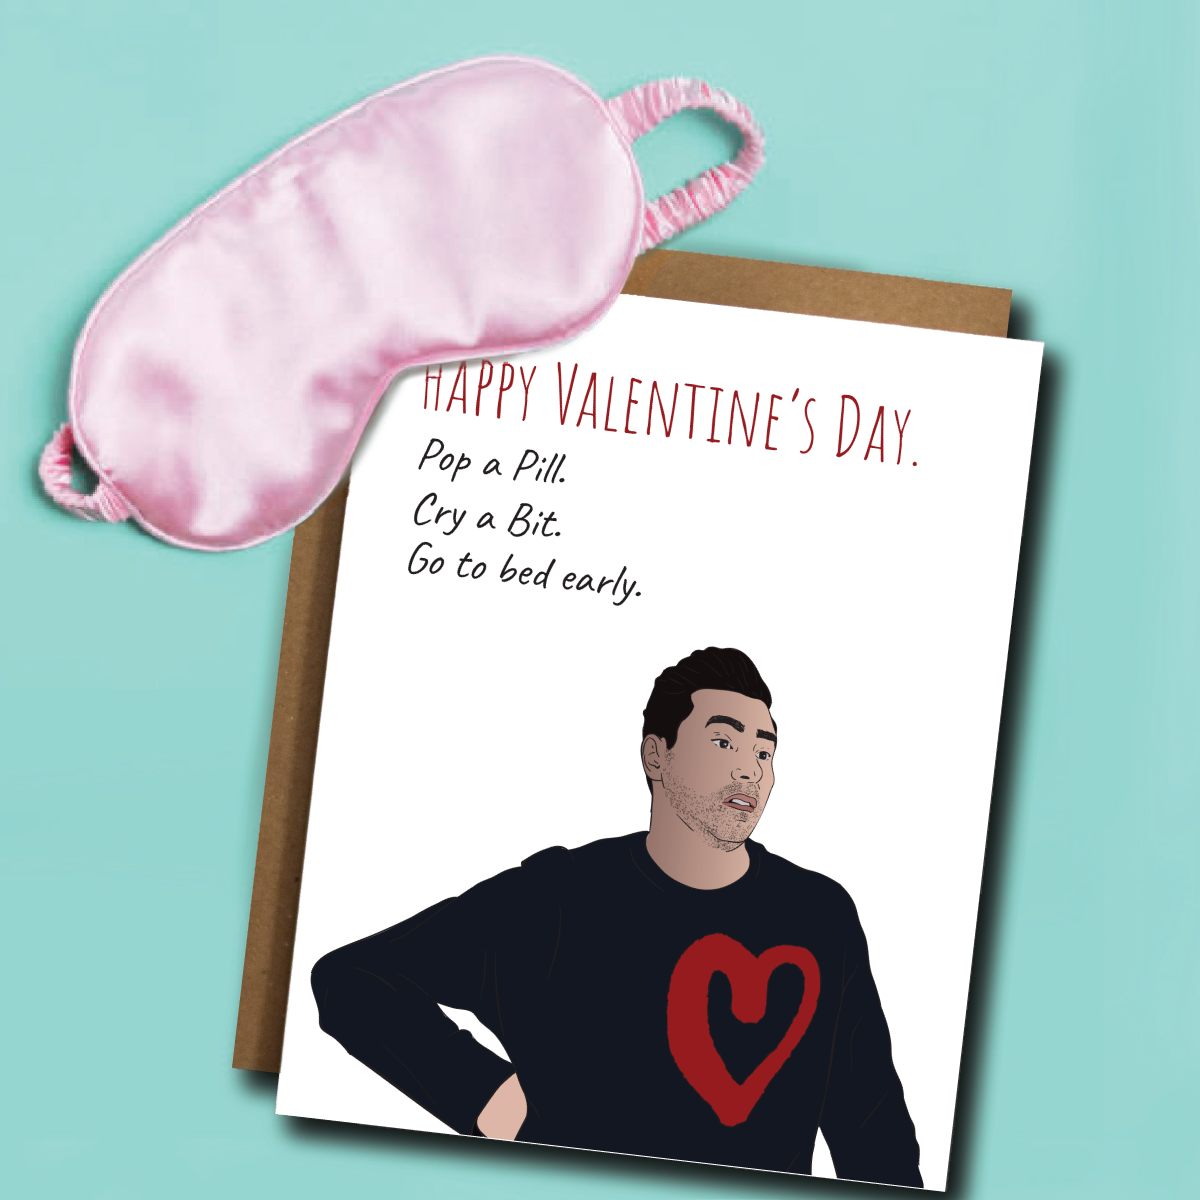 Schitt’s Creek Funny Valentine's Day Card Home Goods The Card Bureau   